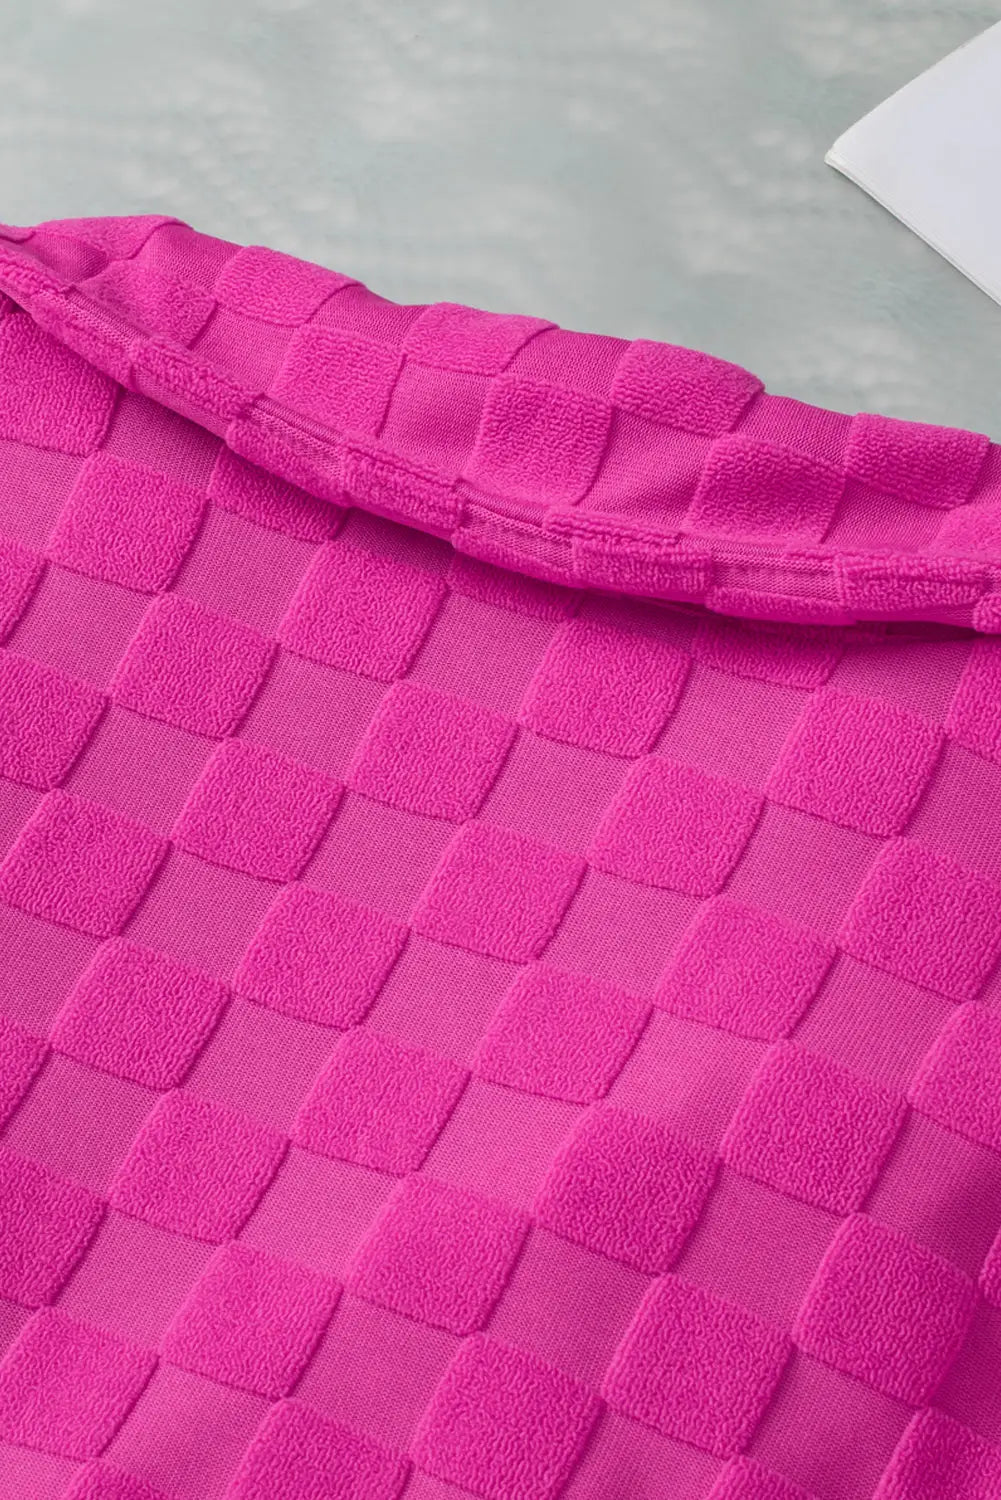 Bright pink lapel neck checkered textured short sleeve shirt - tops